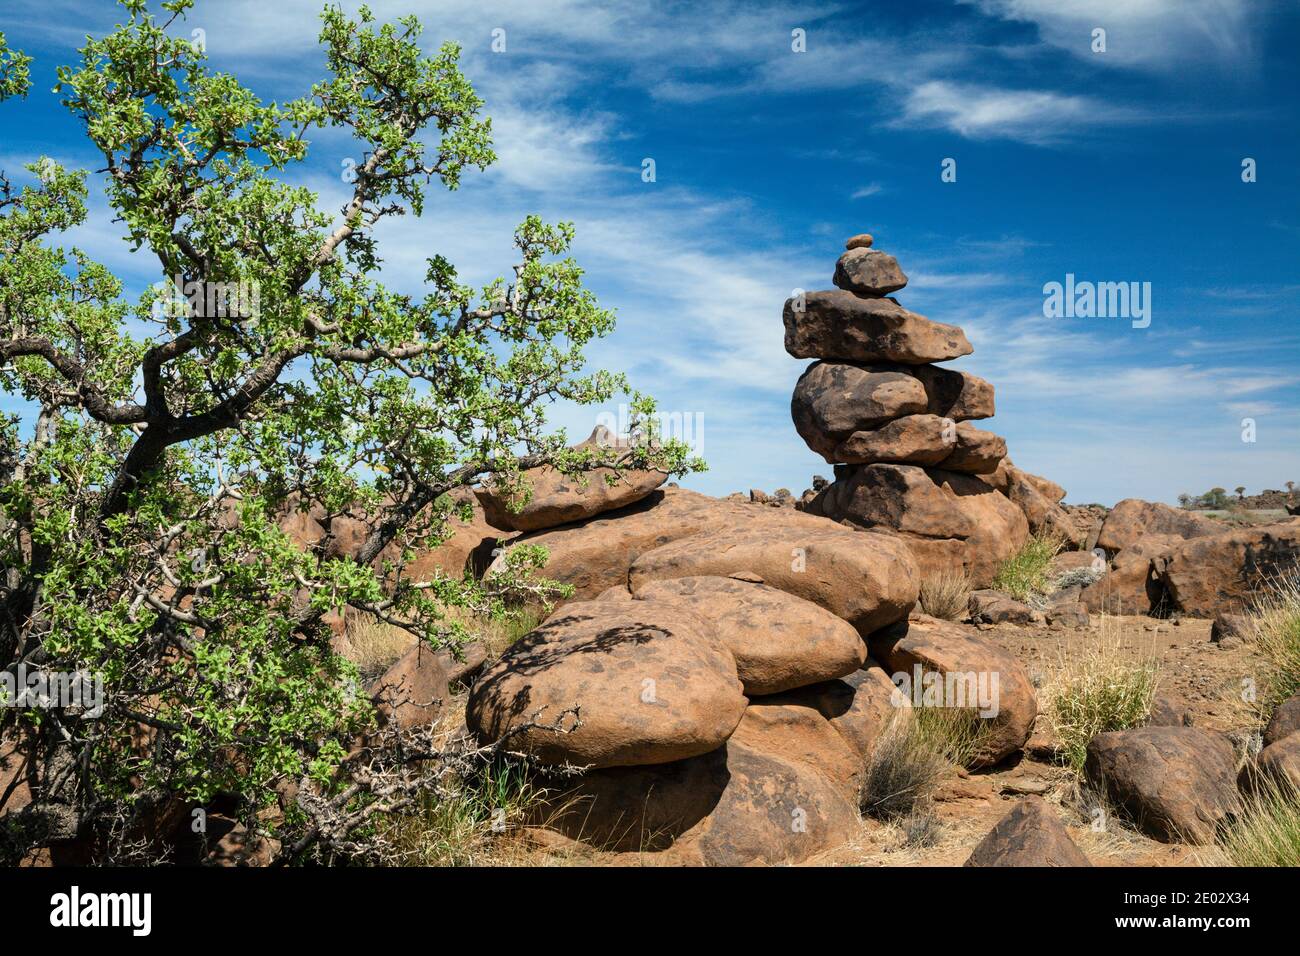 Rocks of Giants Playground, Keetmanshoop, Namibia Foto Stock